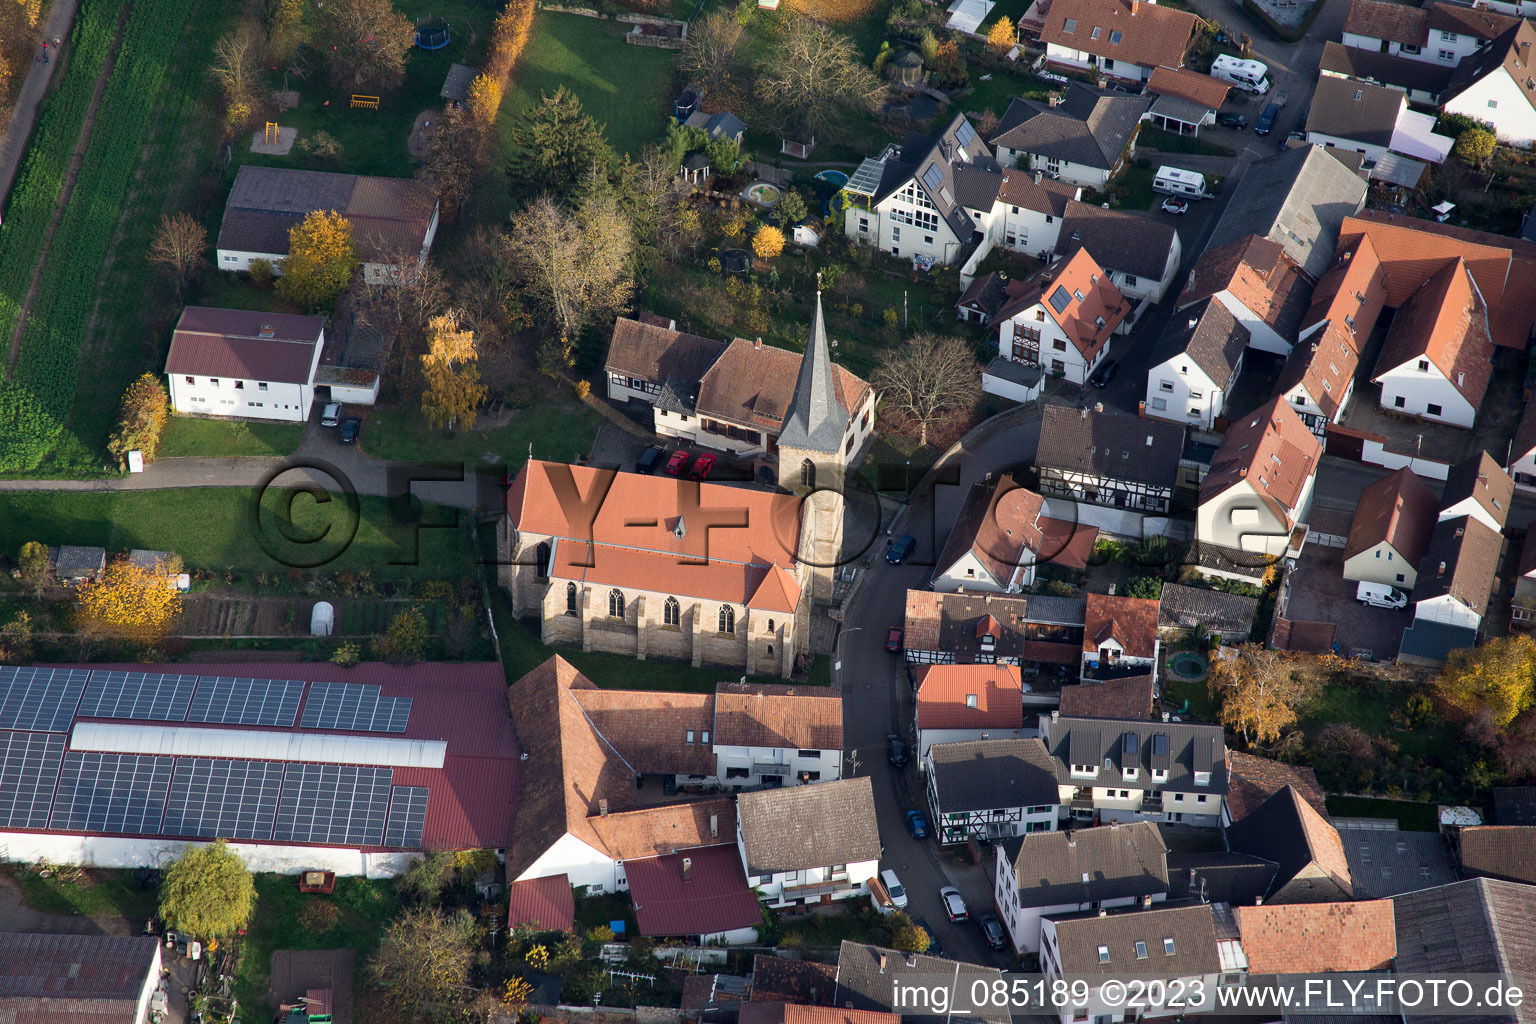 Aerial photograpy of District Ingenheim in Billigheim-Ingenheim in the state Rhineland-Palatinate, Germany